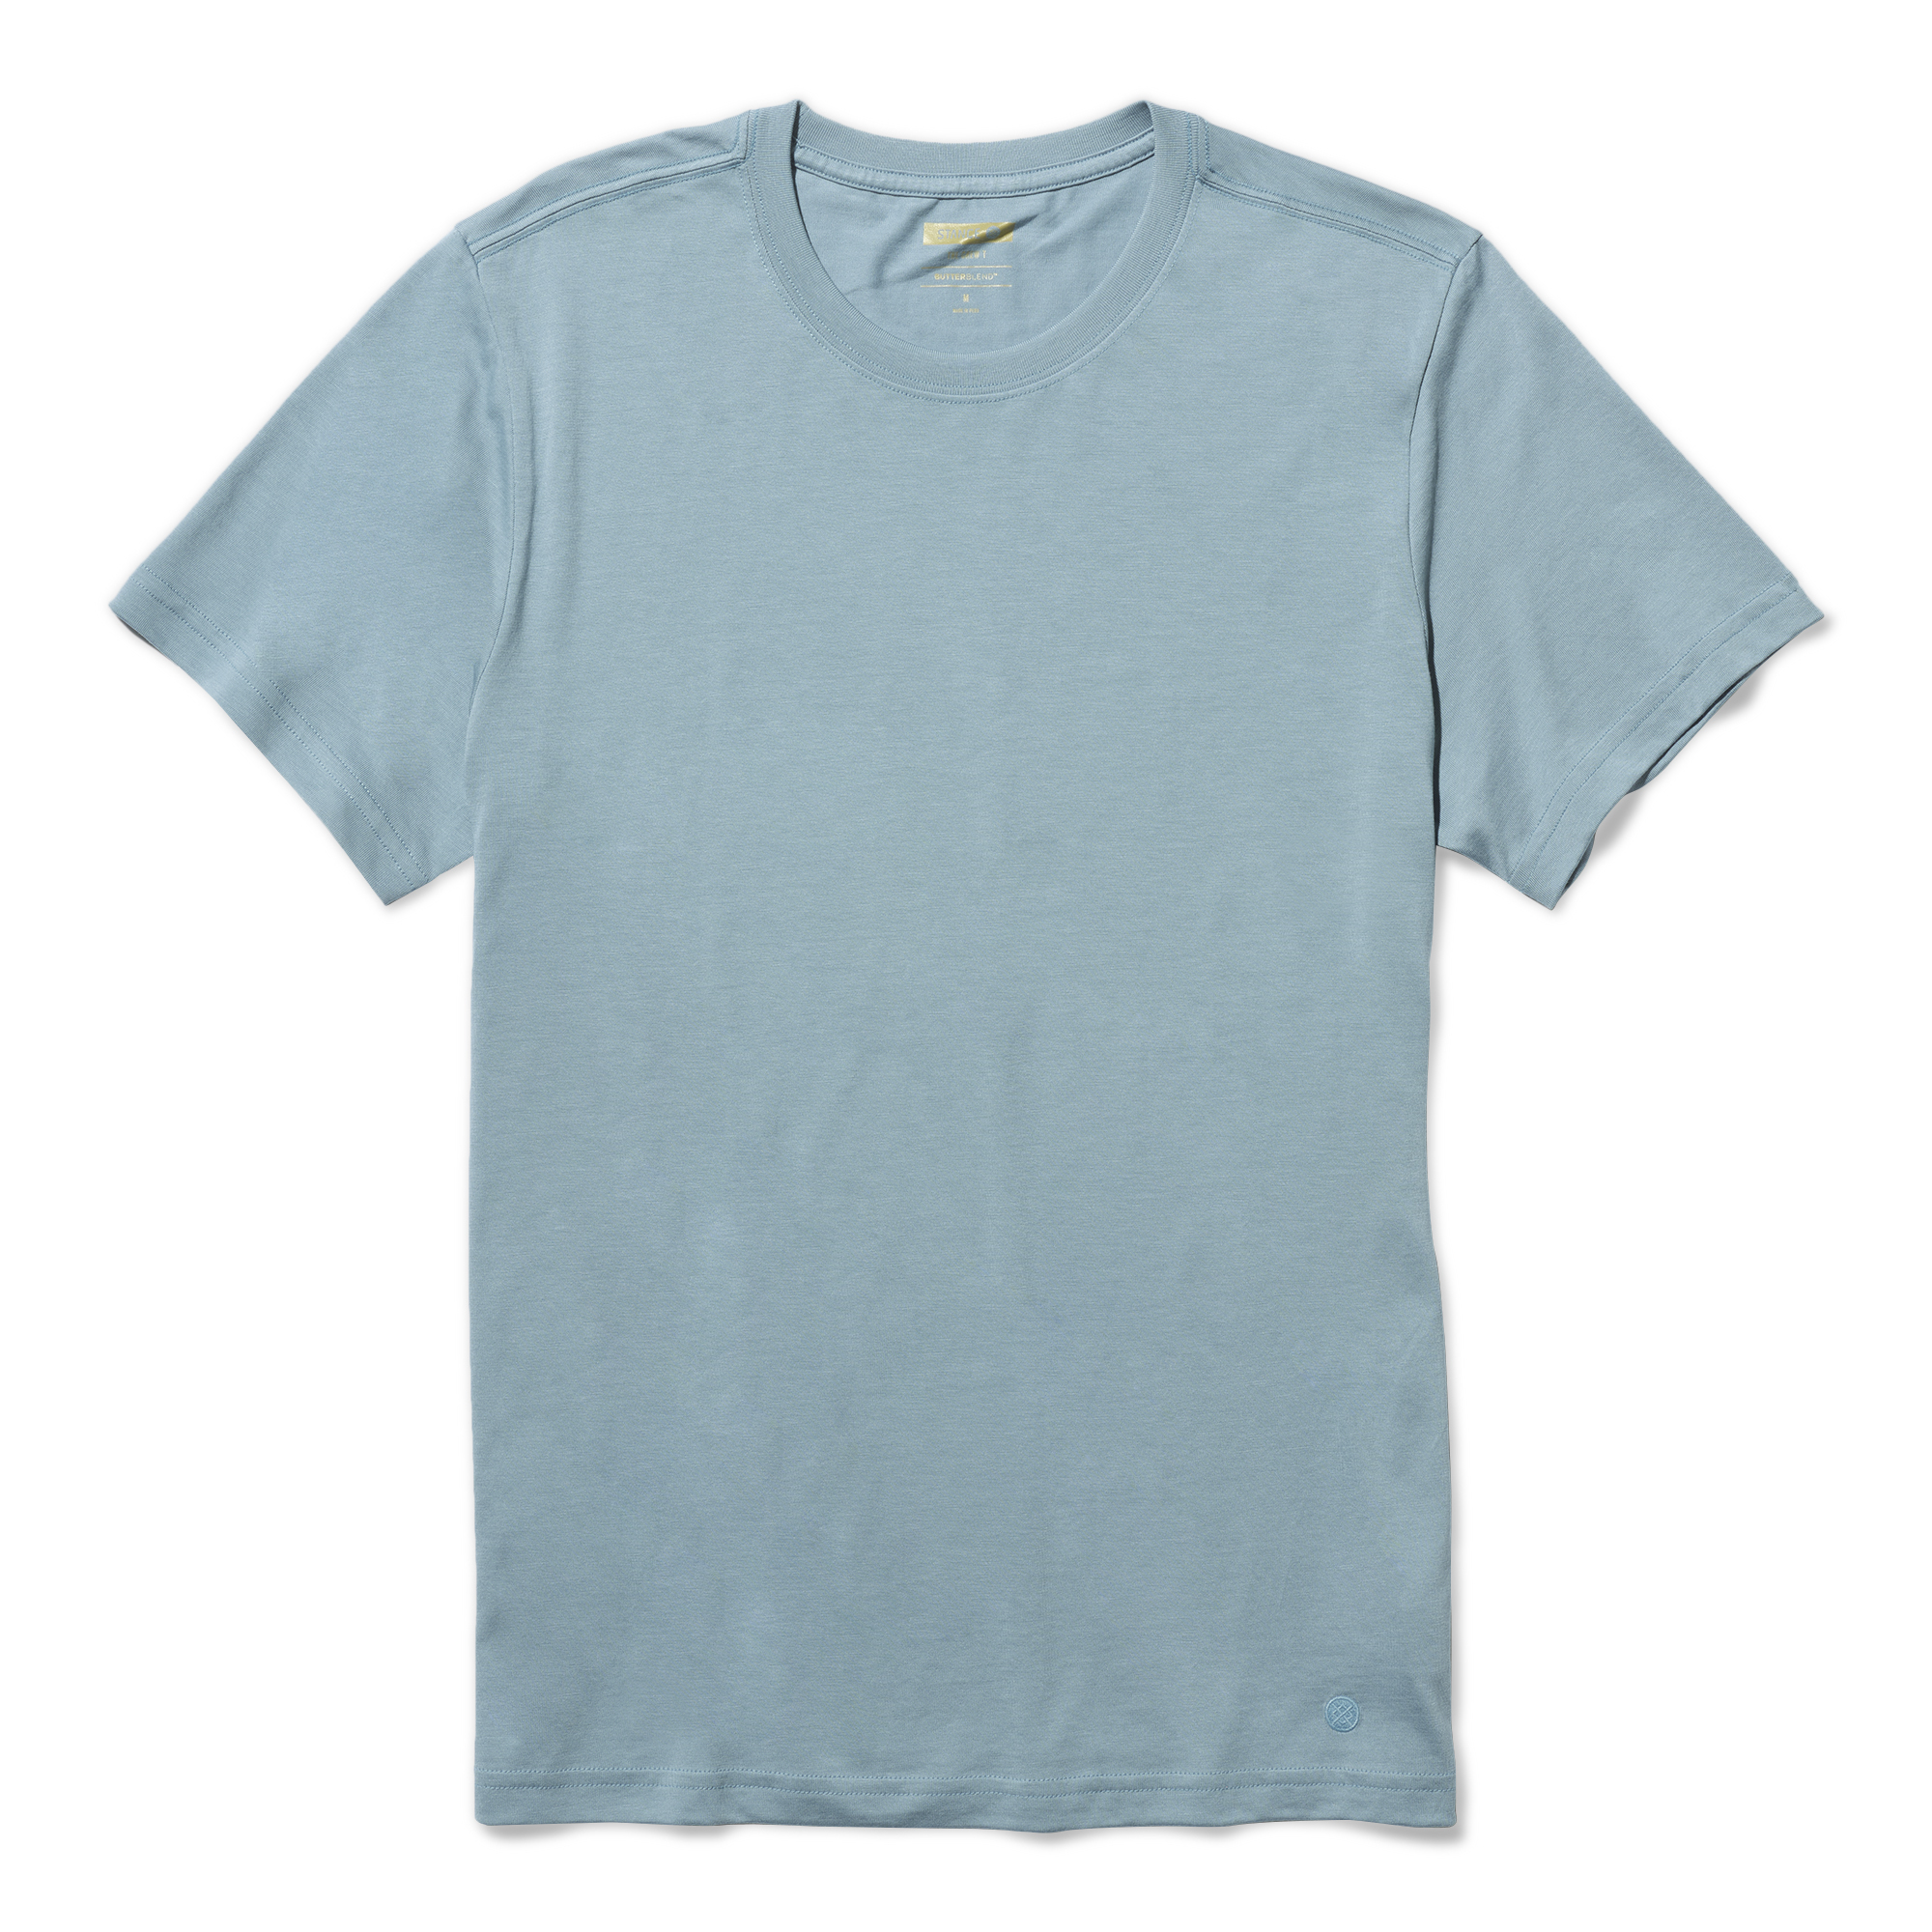 discount 63% Multicolored S Forever 21 Shirt WOMEN FASHION Shirts & T-shirts Shirt Print 